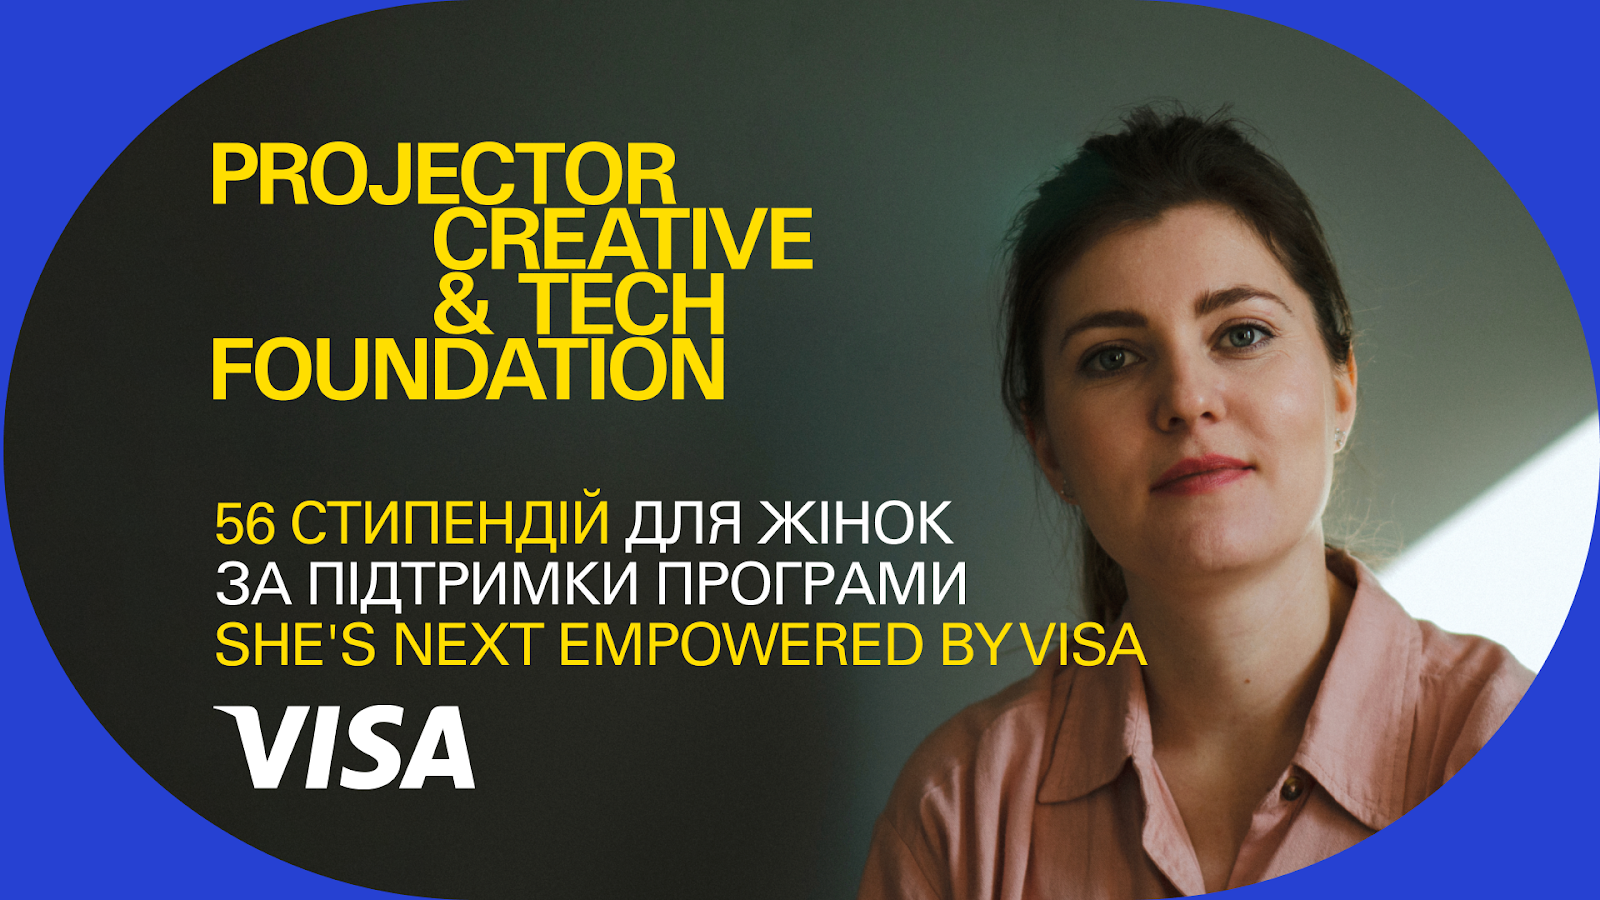 Projector Foundation запустила перші навчальні групи для жінок за підтримки програми She's Next Empowered by Visa